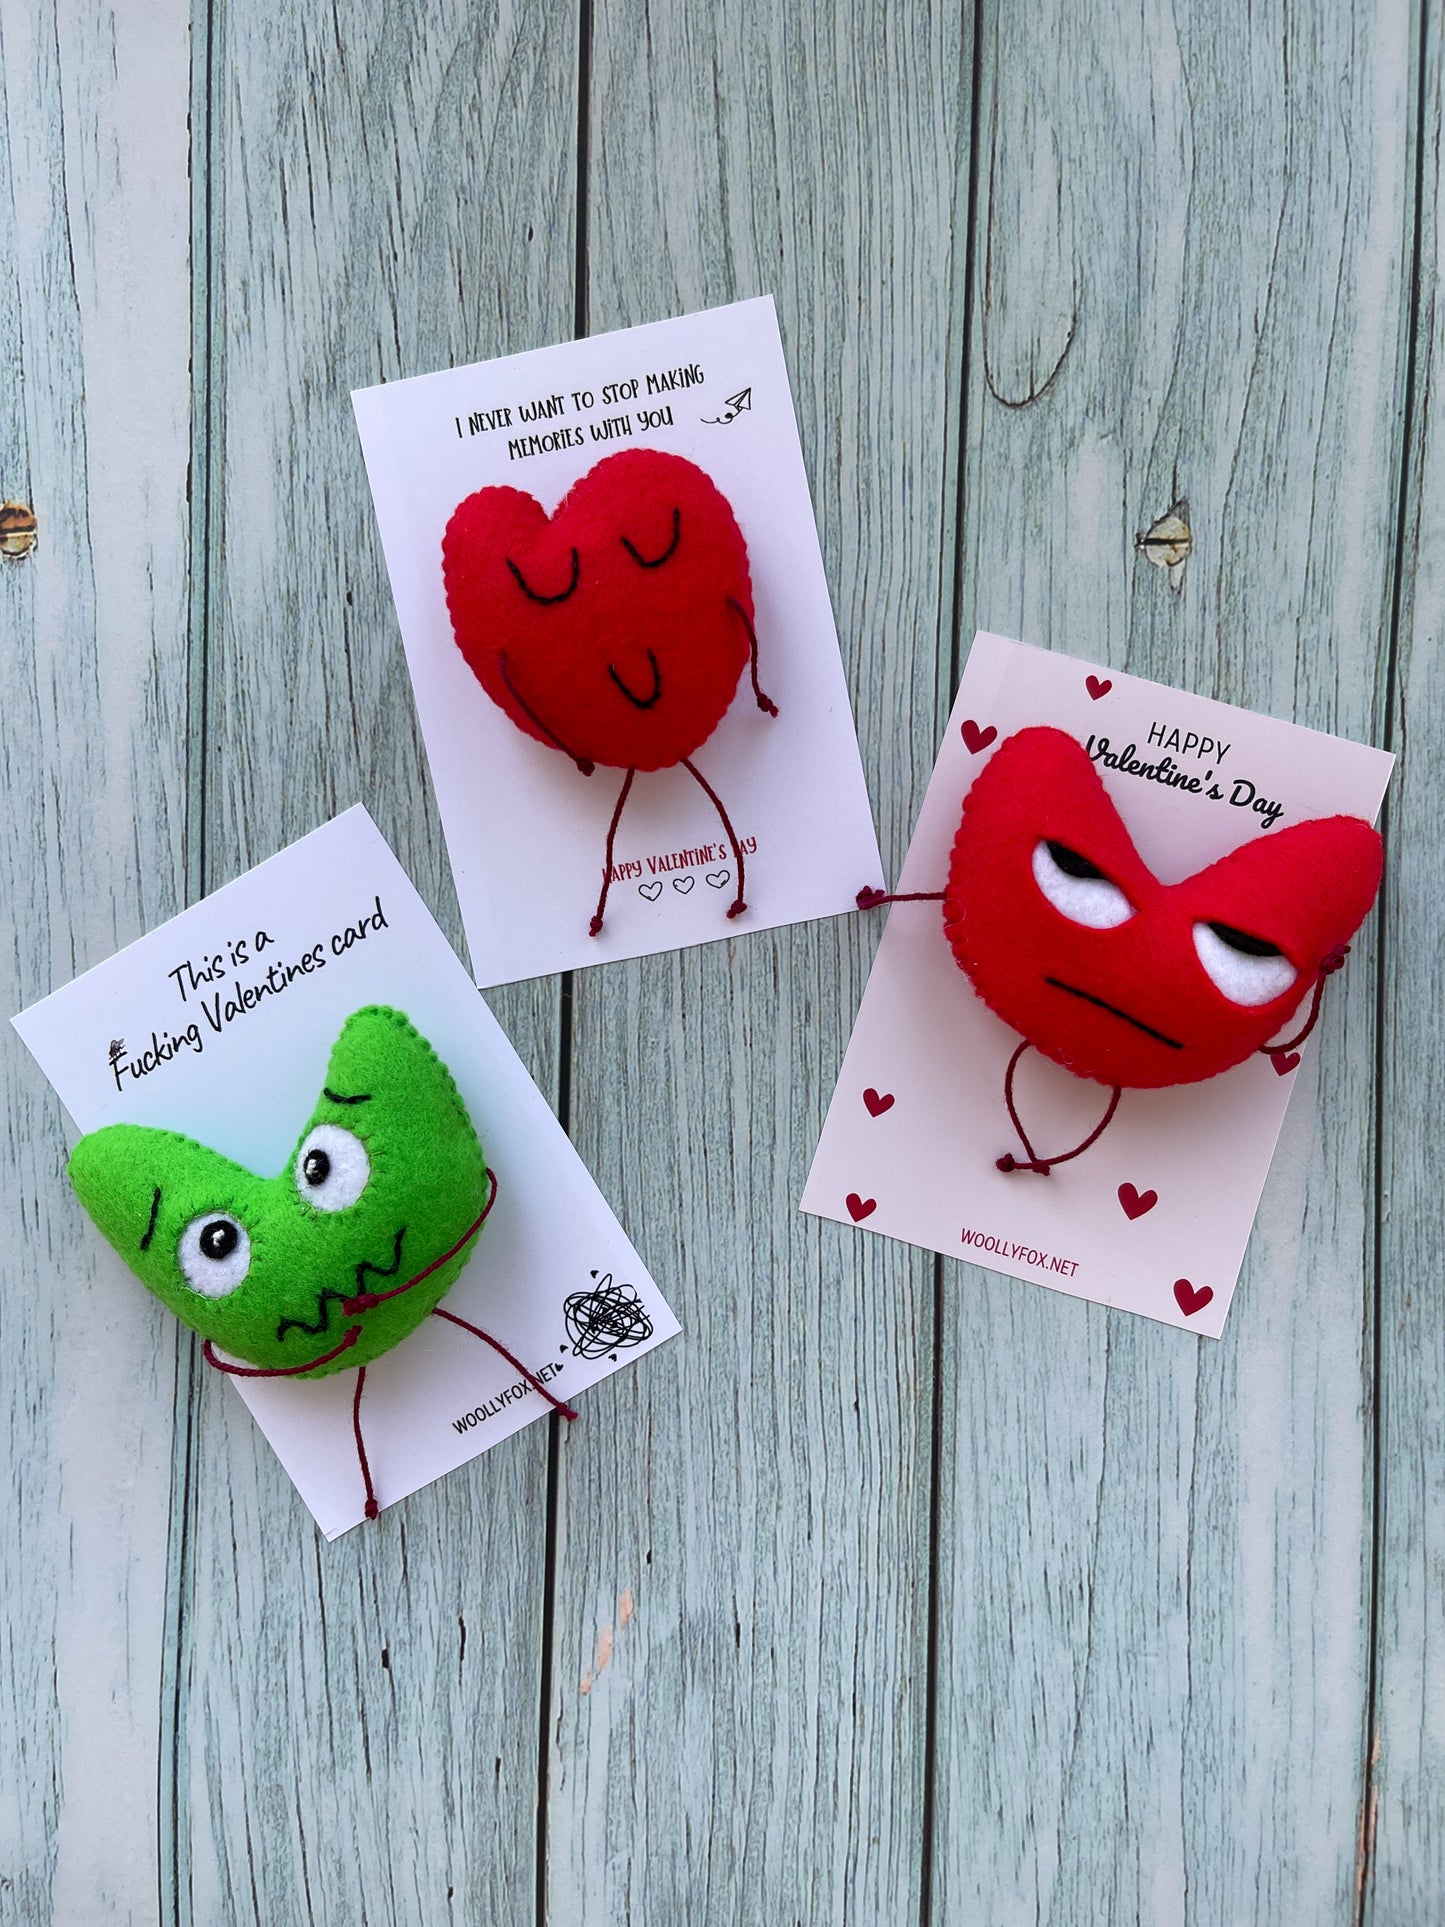 Love Heart Pocket Hug | Funny Heart Valentine’s Day card | Hand Sewn Felt Pocket Hug | Pick Me Up Gift |Girlfriend Boyfriend Letter Box Gift